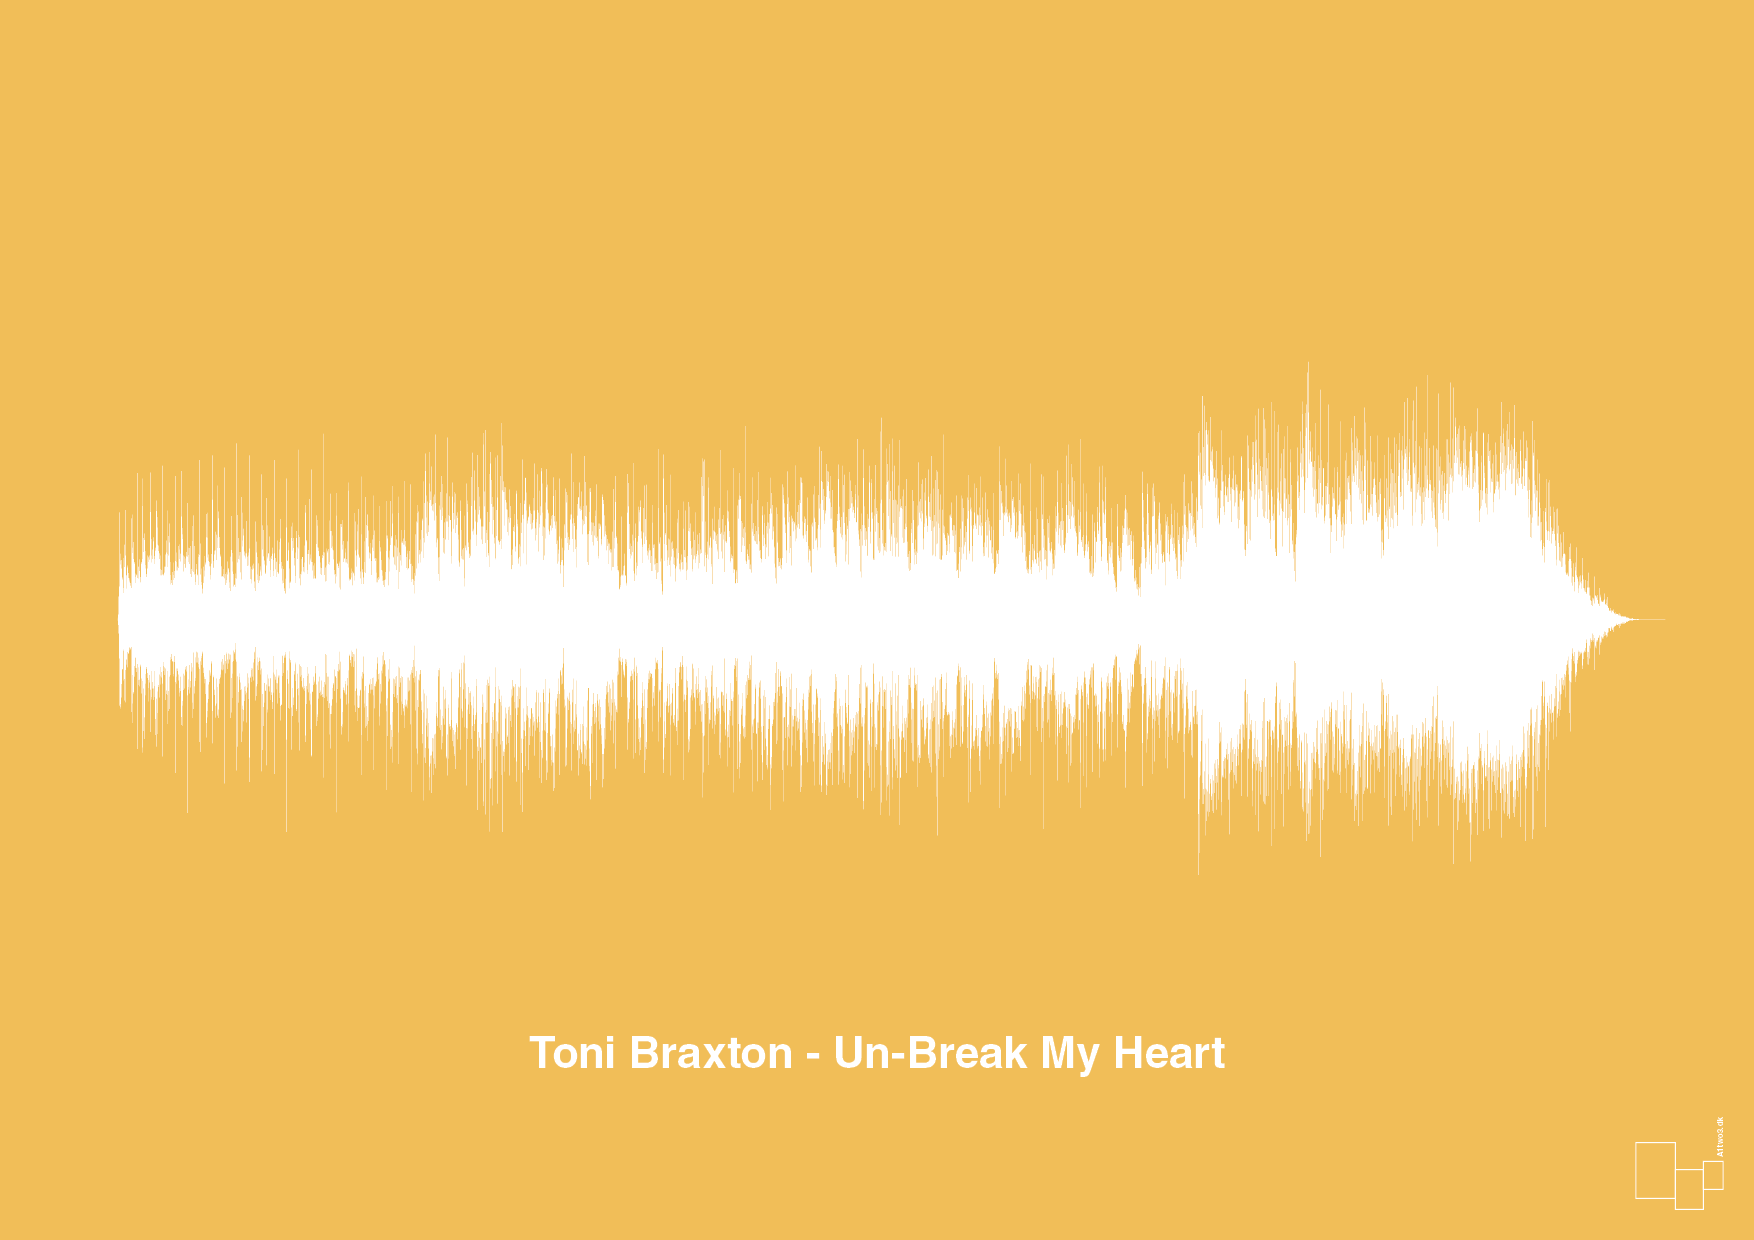 toni braxton - un-break my heart - Plakat med Musik i Honeycomb